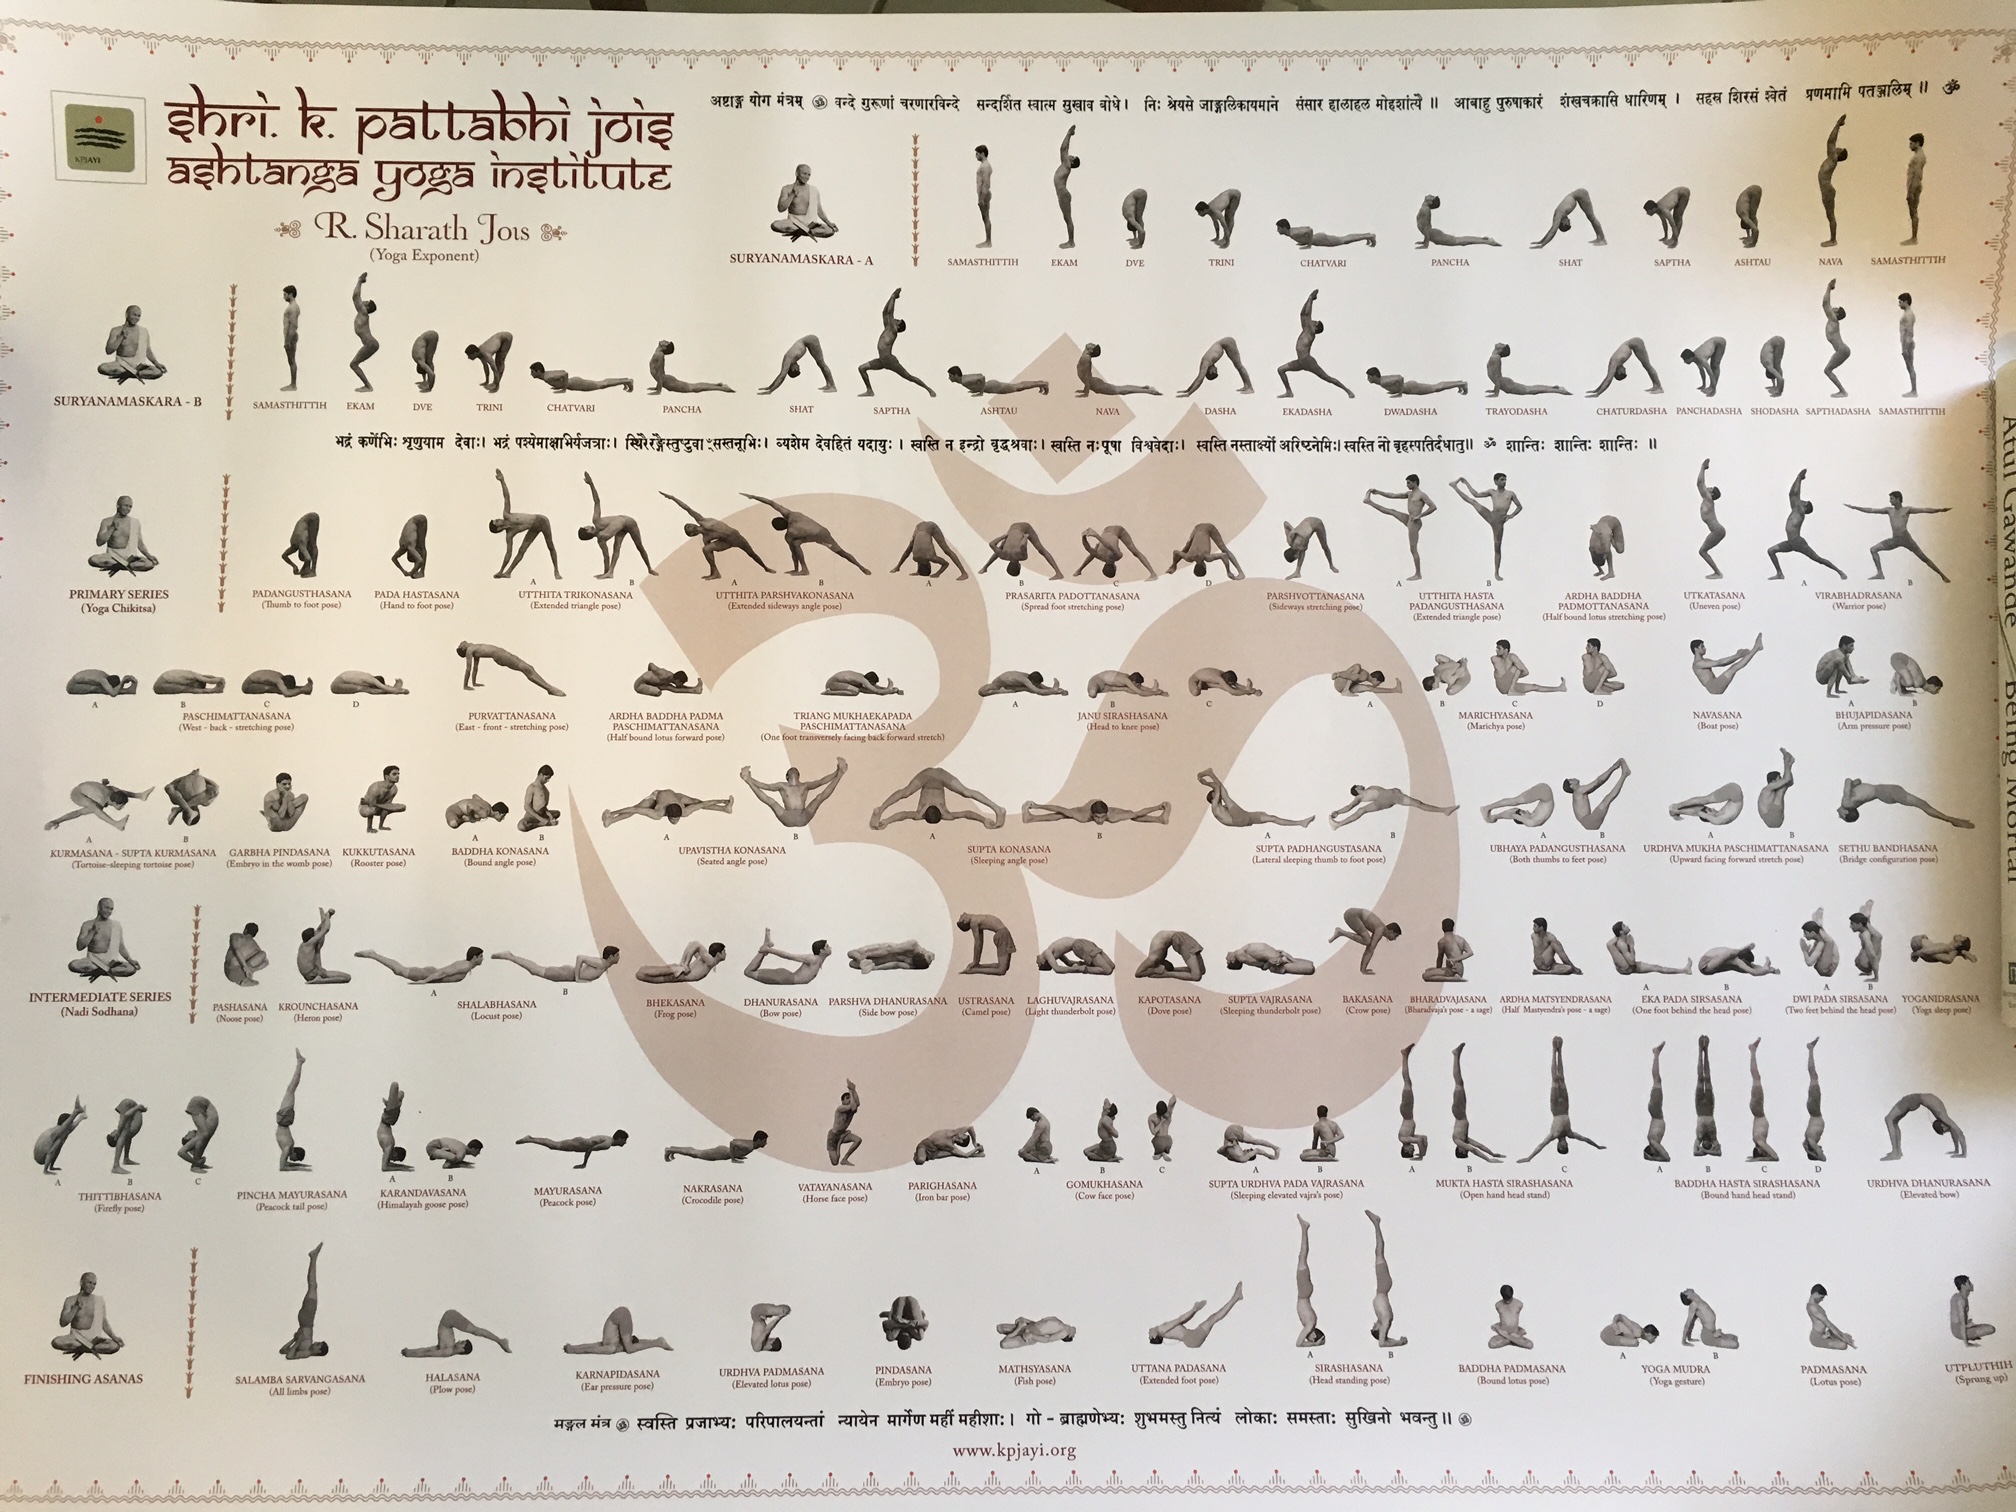 ashtanga yoga sequence